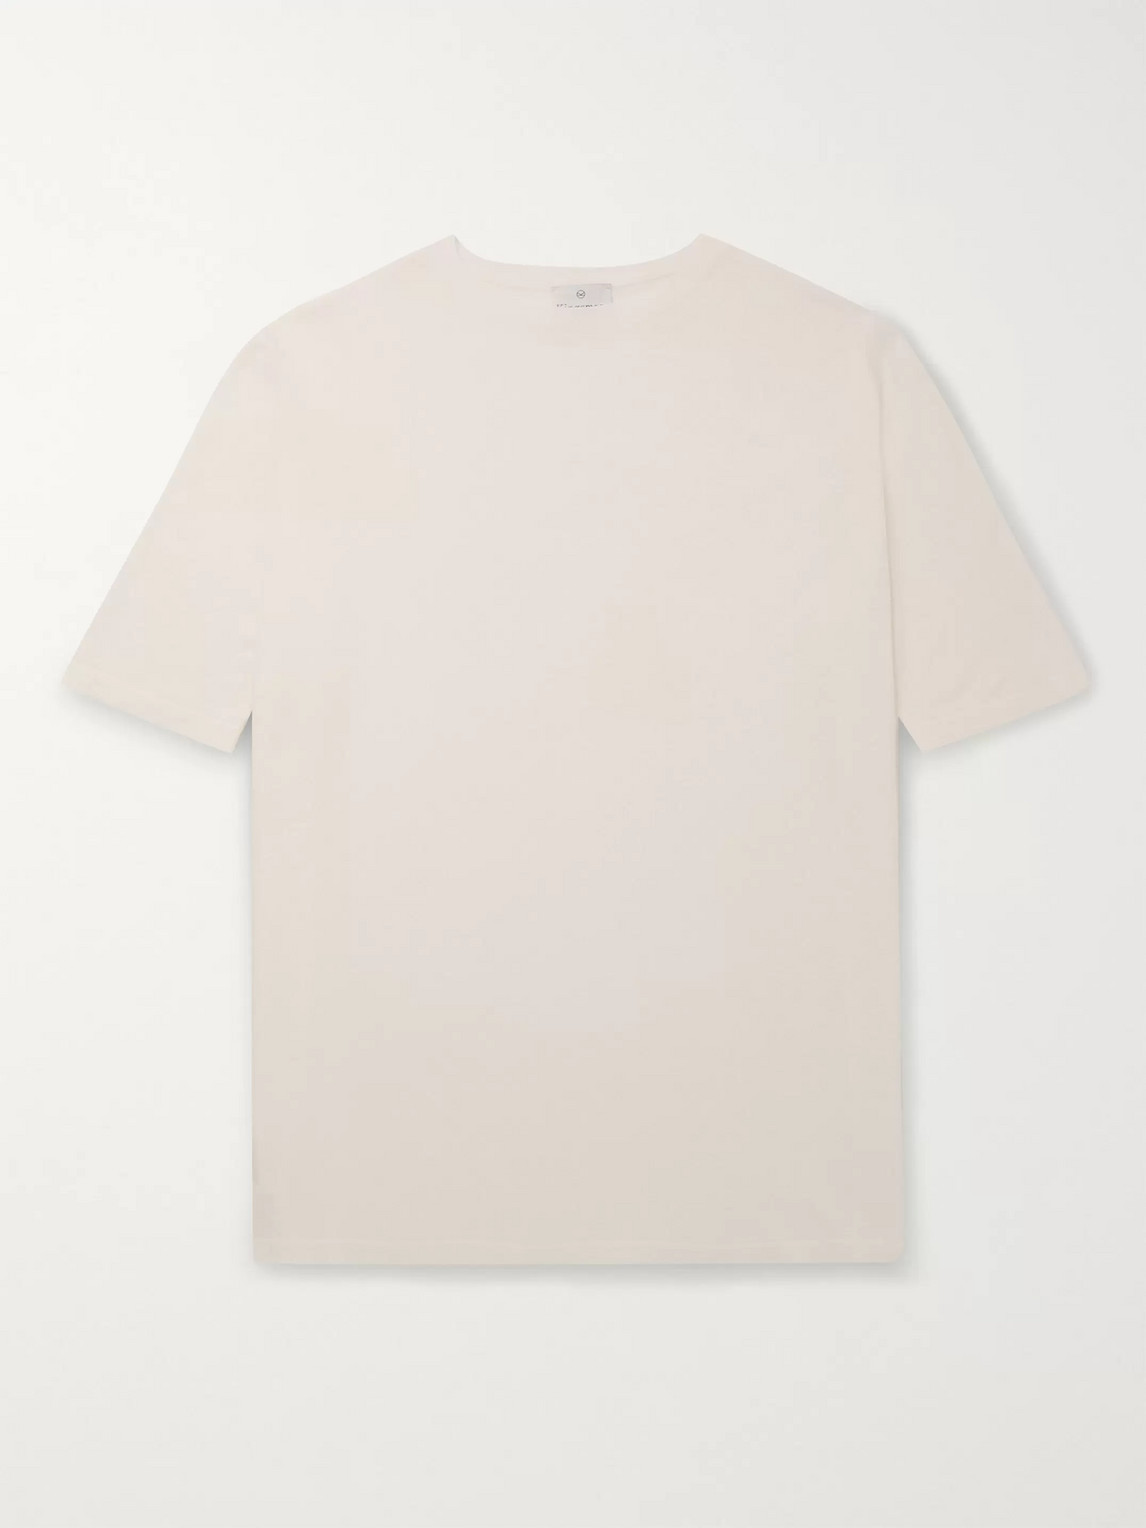 Kingsman Wool T-shirt In White